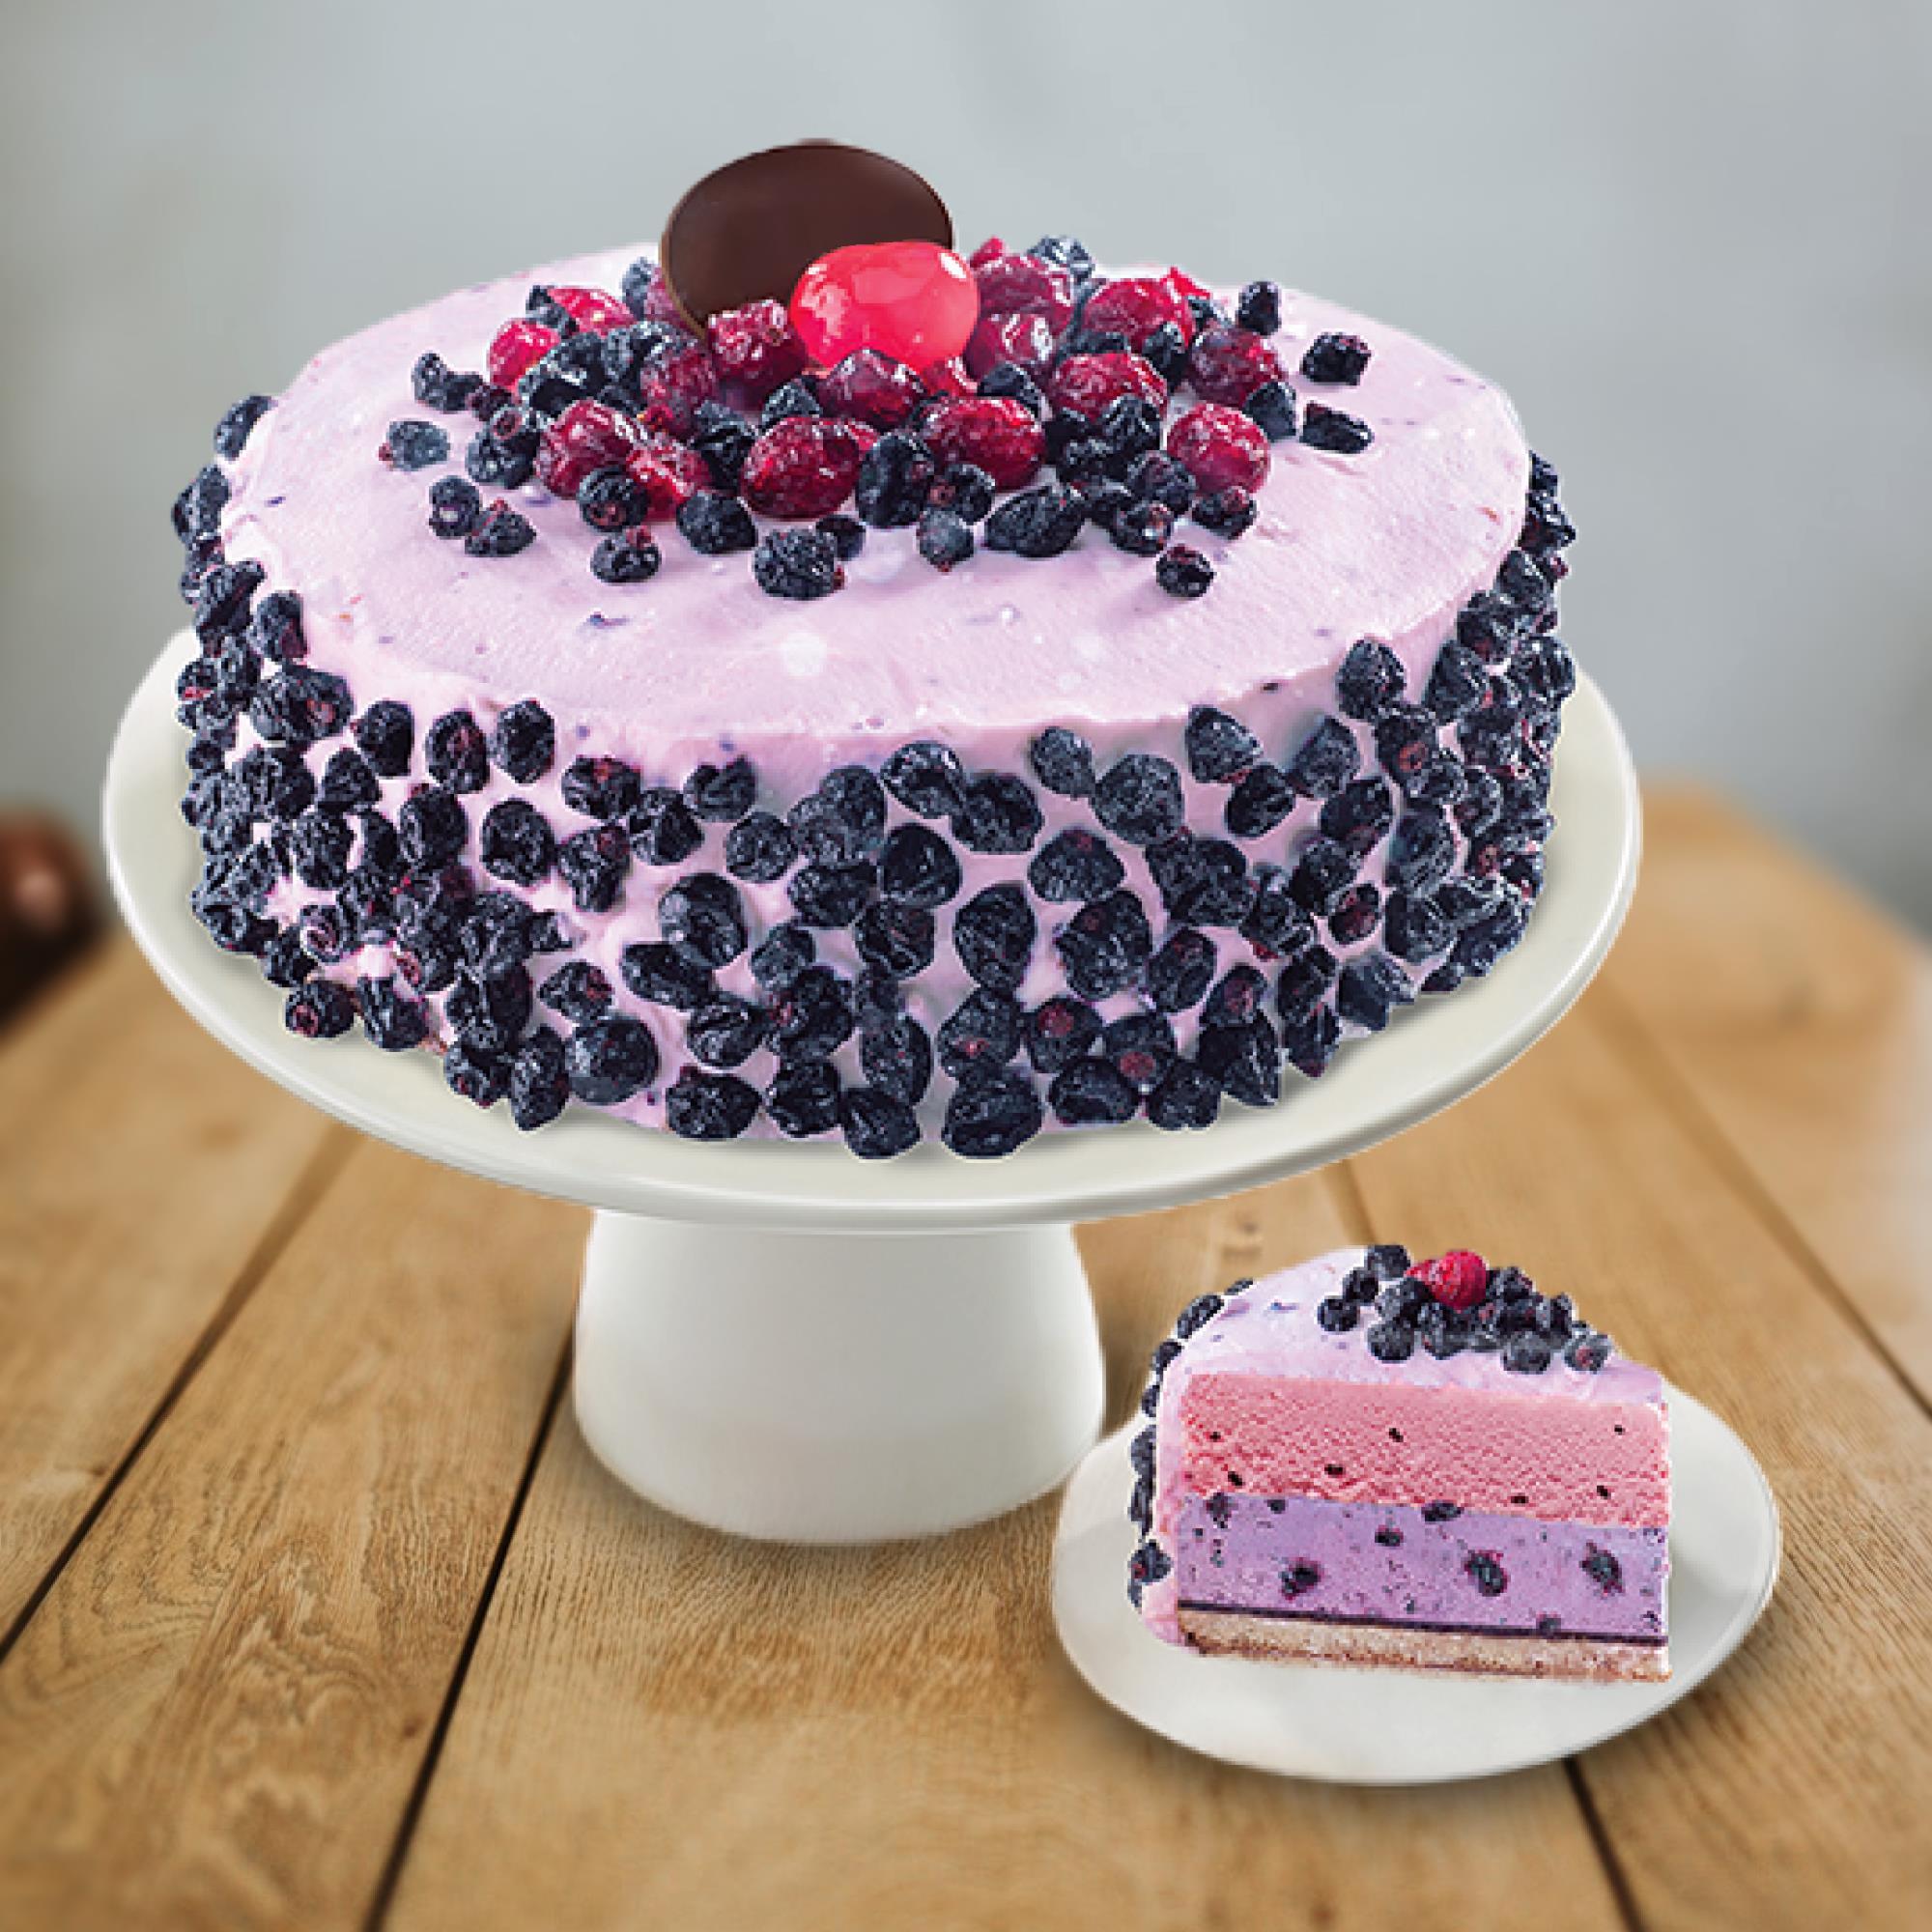 परफेक्ट केक बनाने की रेसिपी ।Black Current Cake Recipe |Whipped Cream Cake | Cake Recipe - YouTube